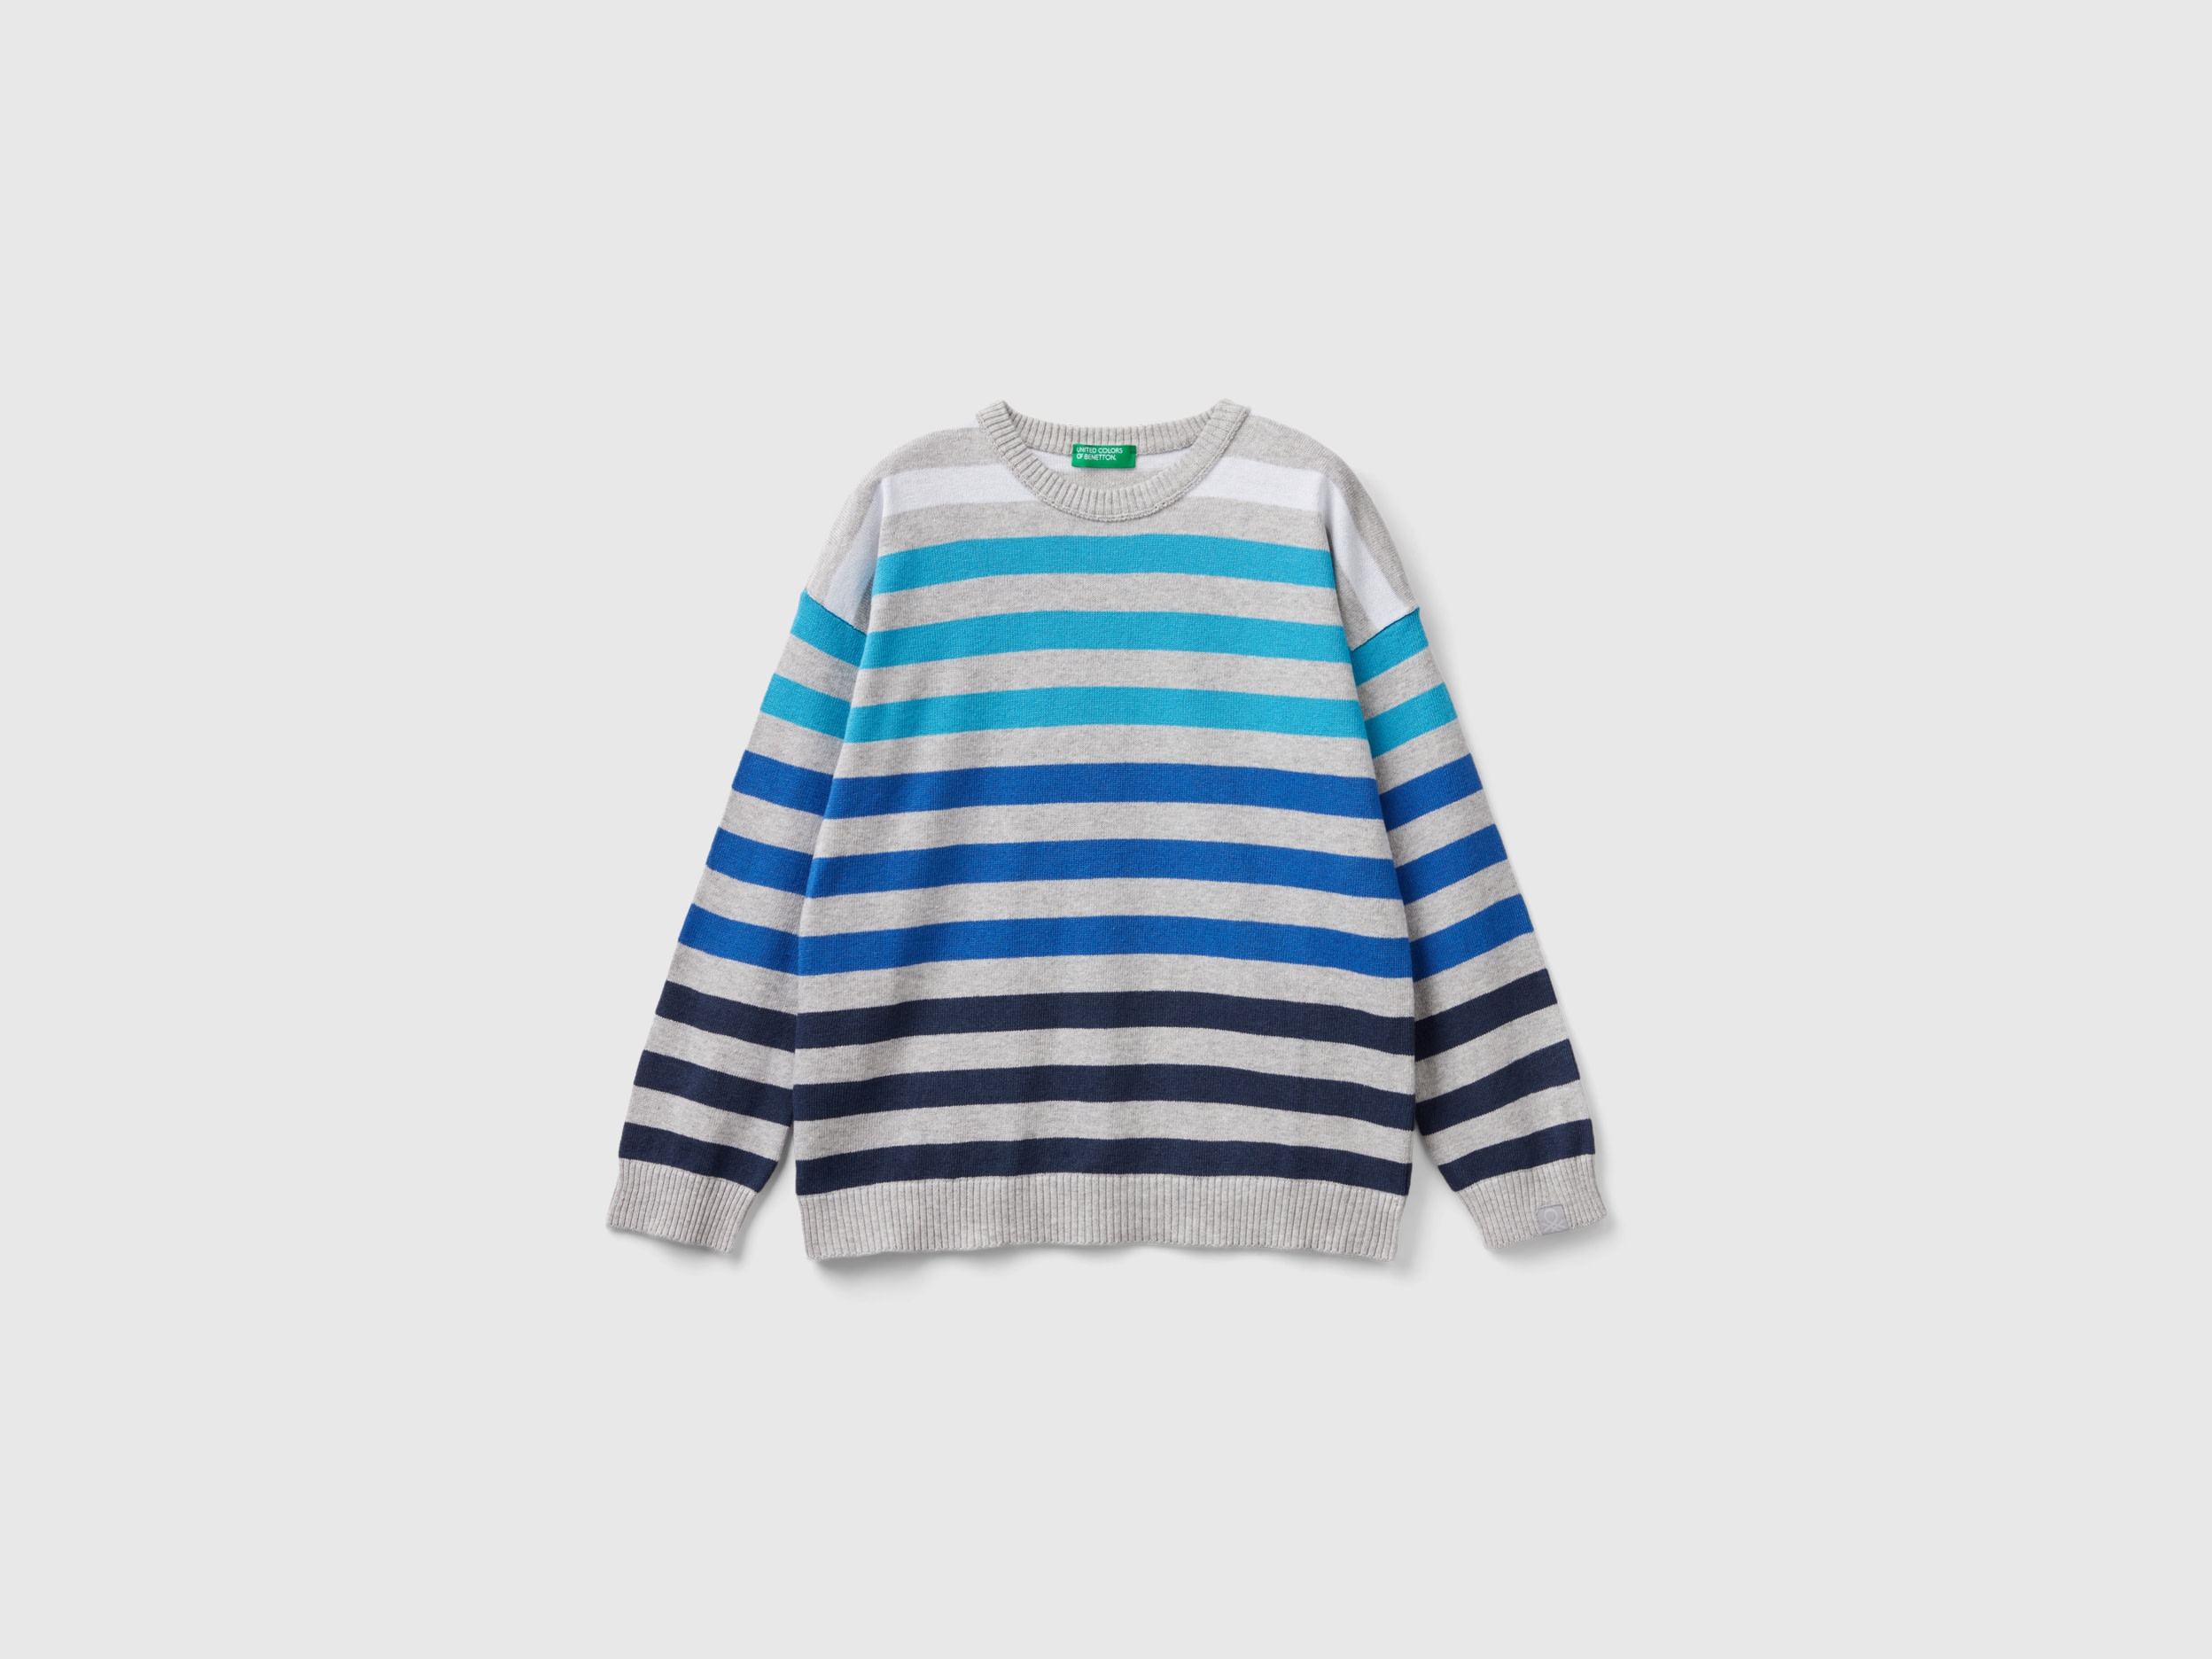 Image of Benetton, Striped Sweater, size XL, Light Gray, Kids